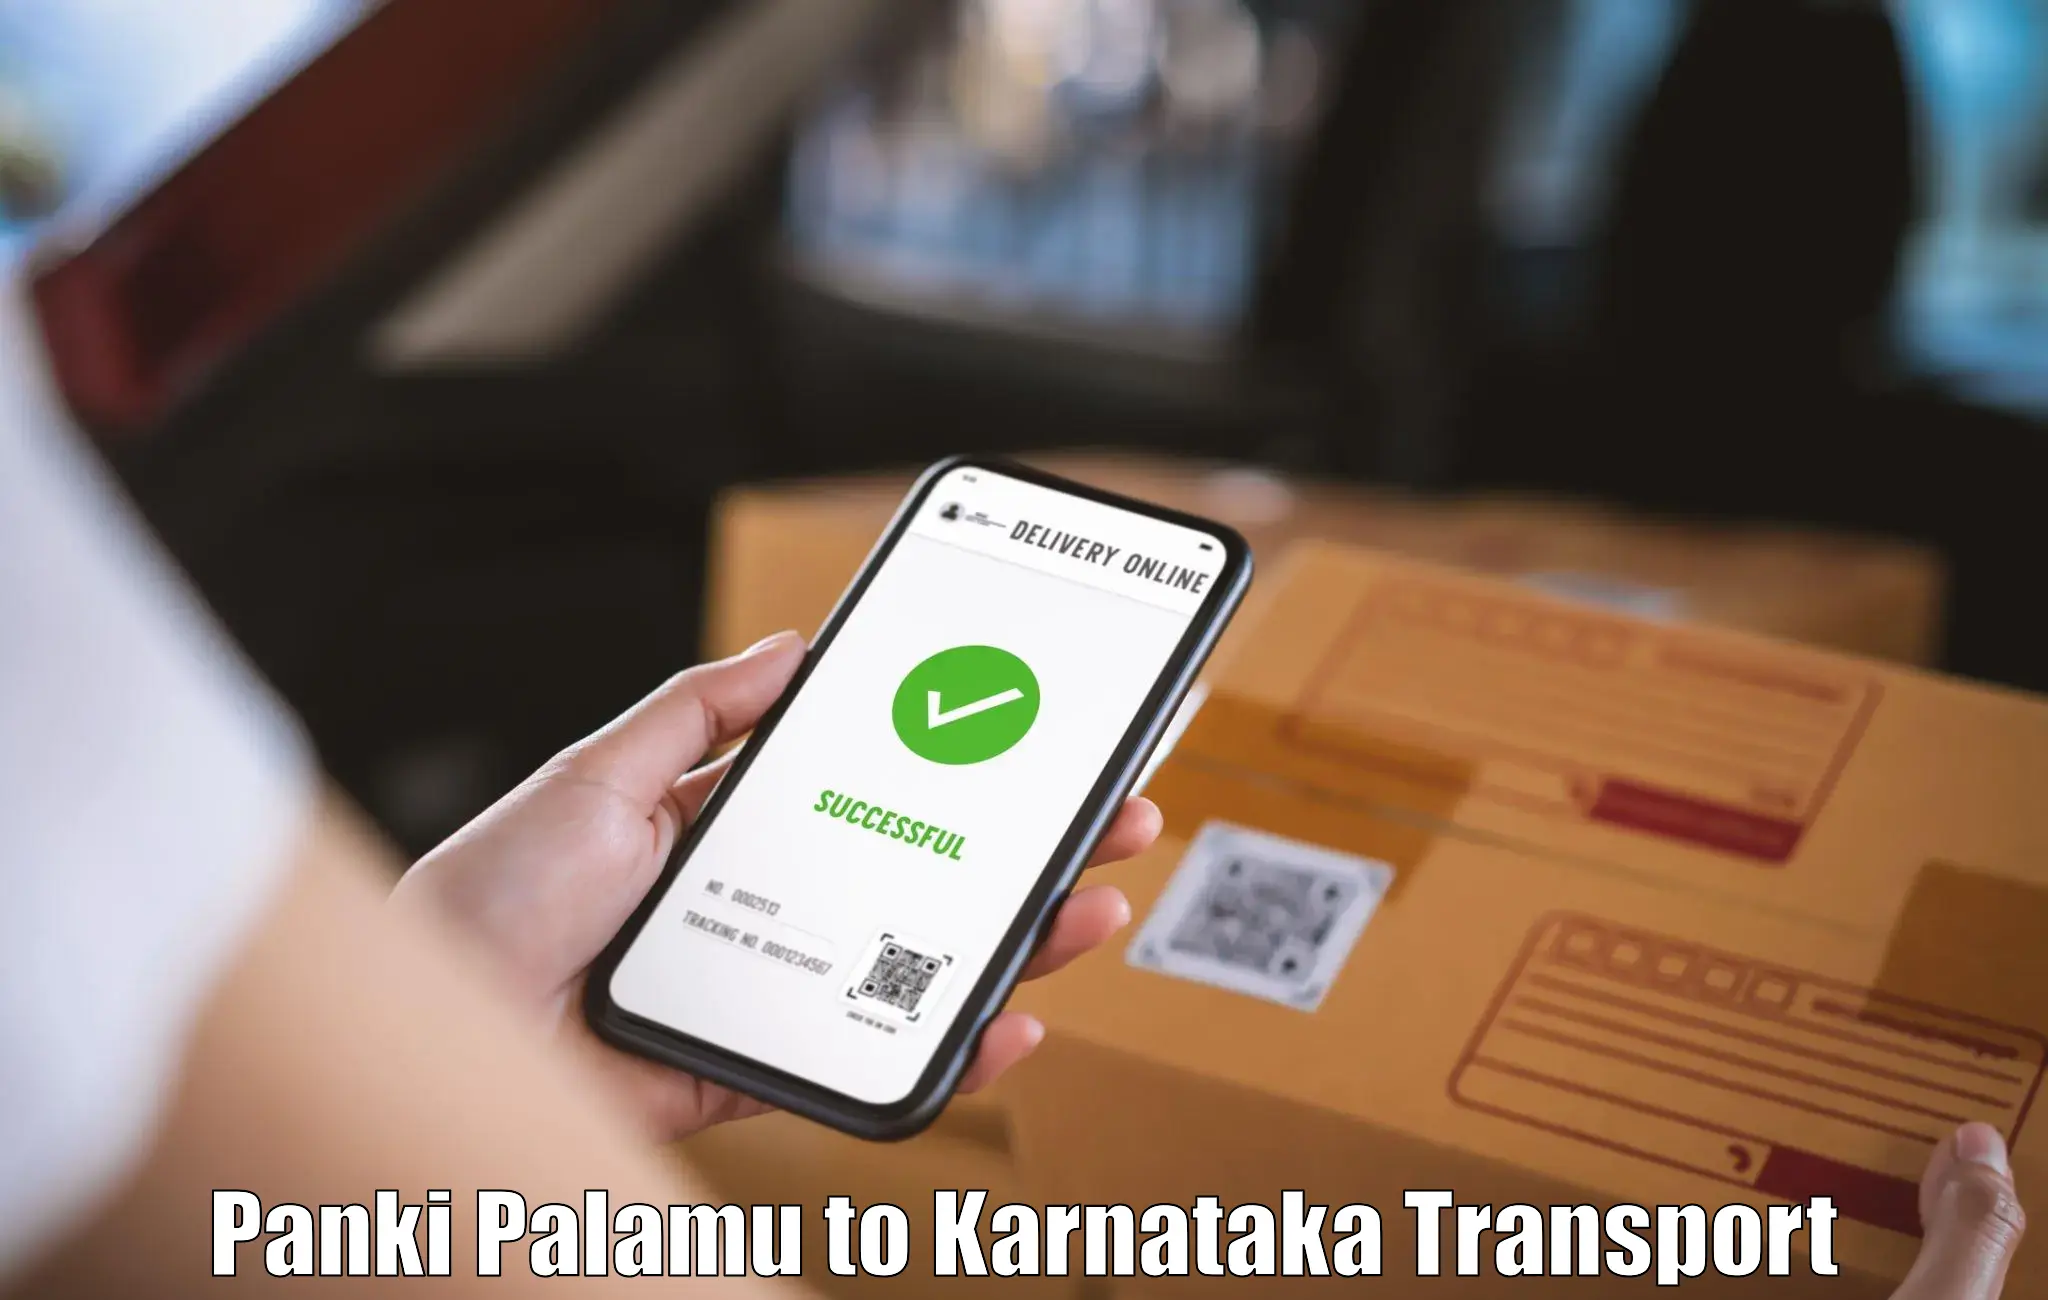 Nearest transport service Panki Palamu to Kanjarakatte